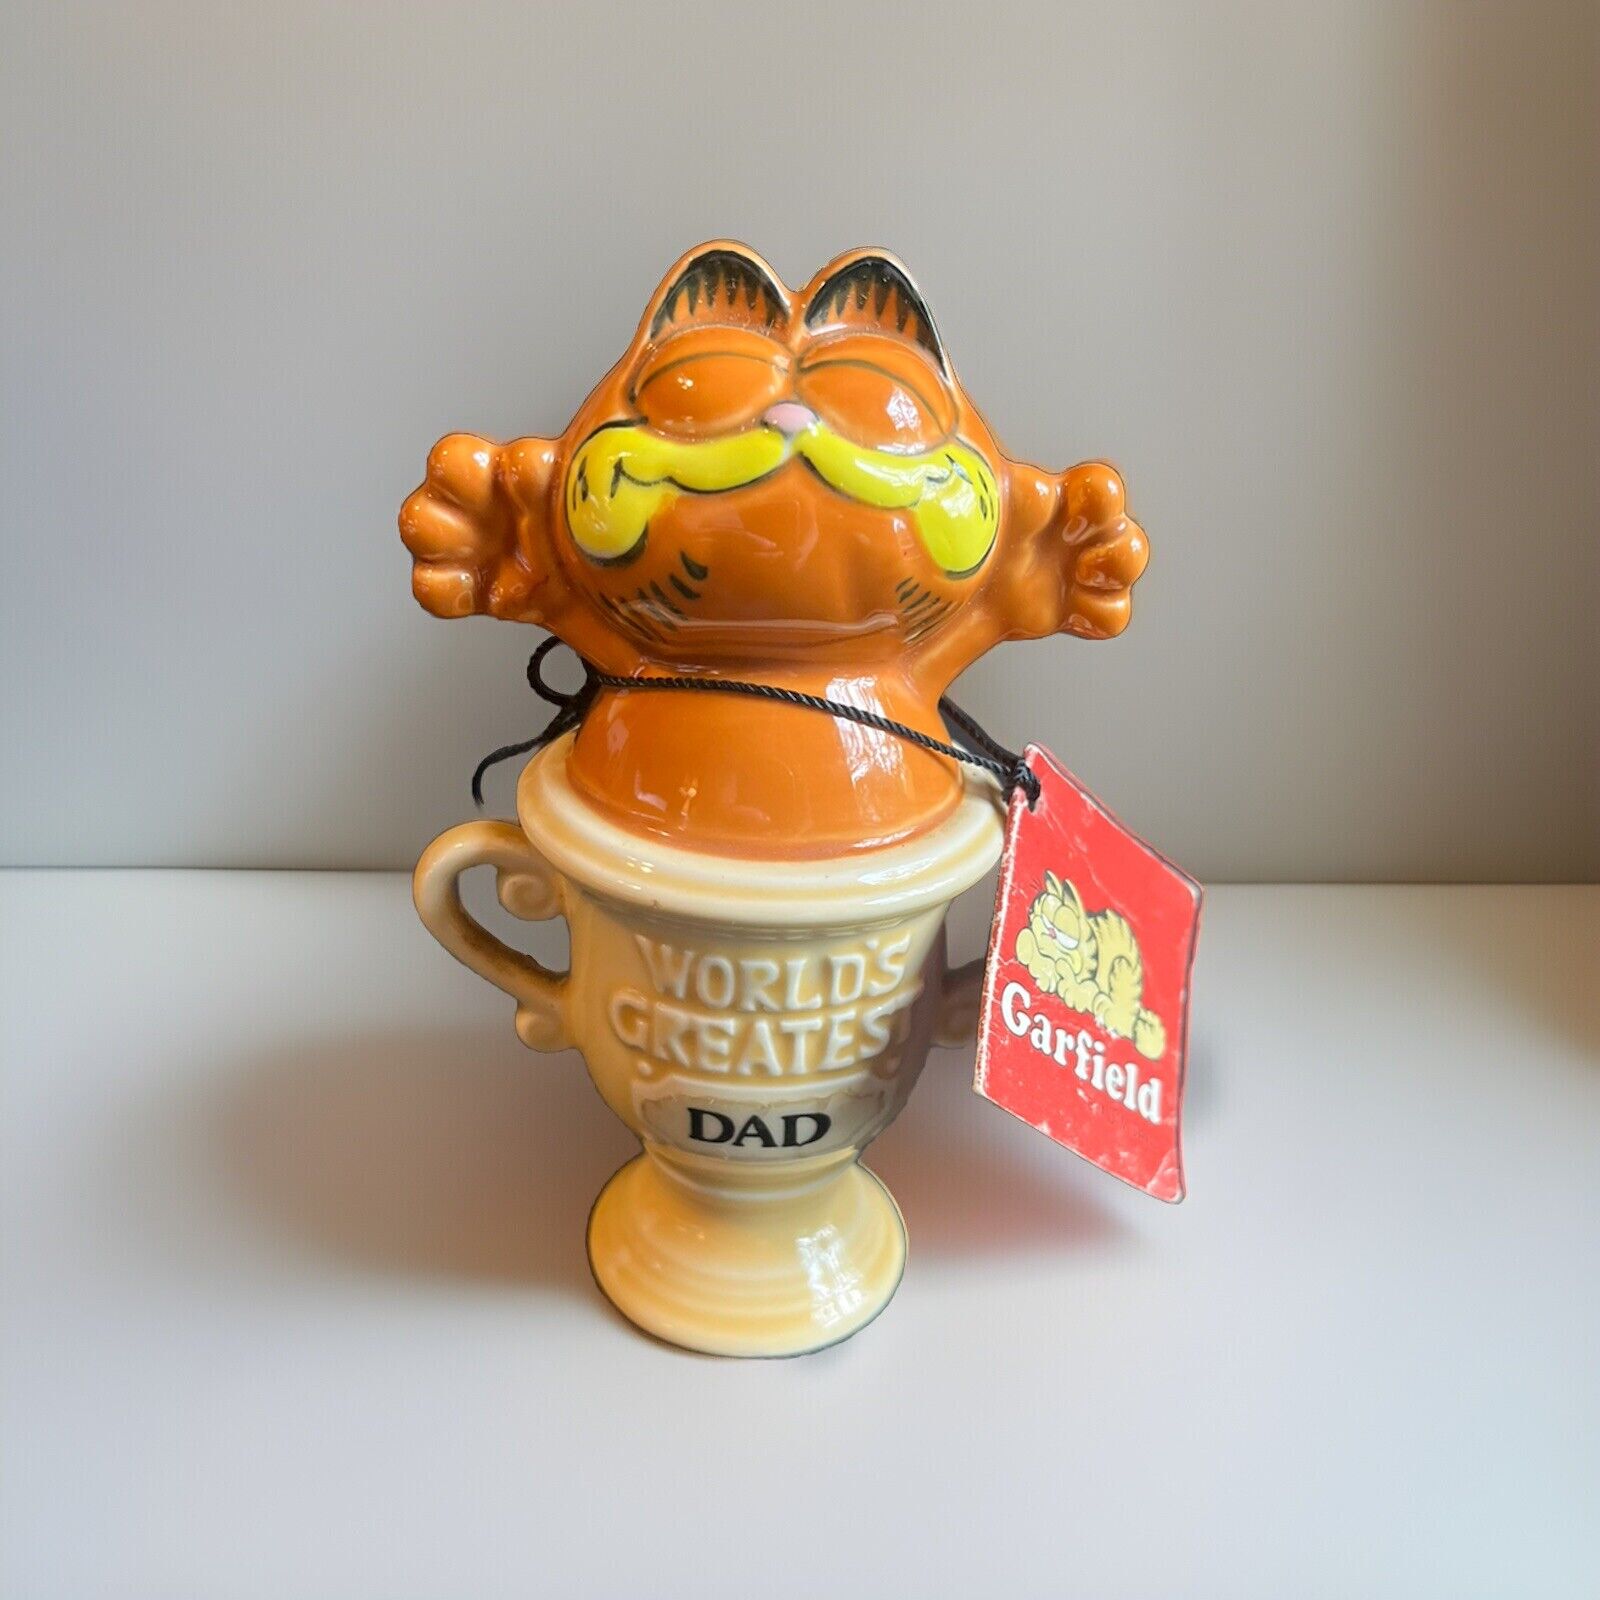 Enesco Garfield World\'s Greatest Ceramic Figurine 5 Inch